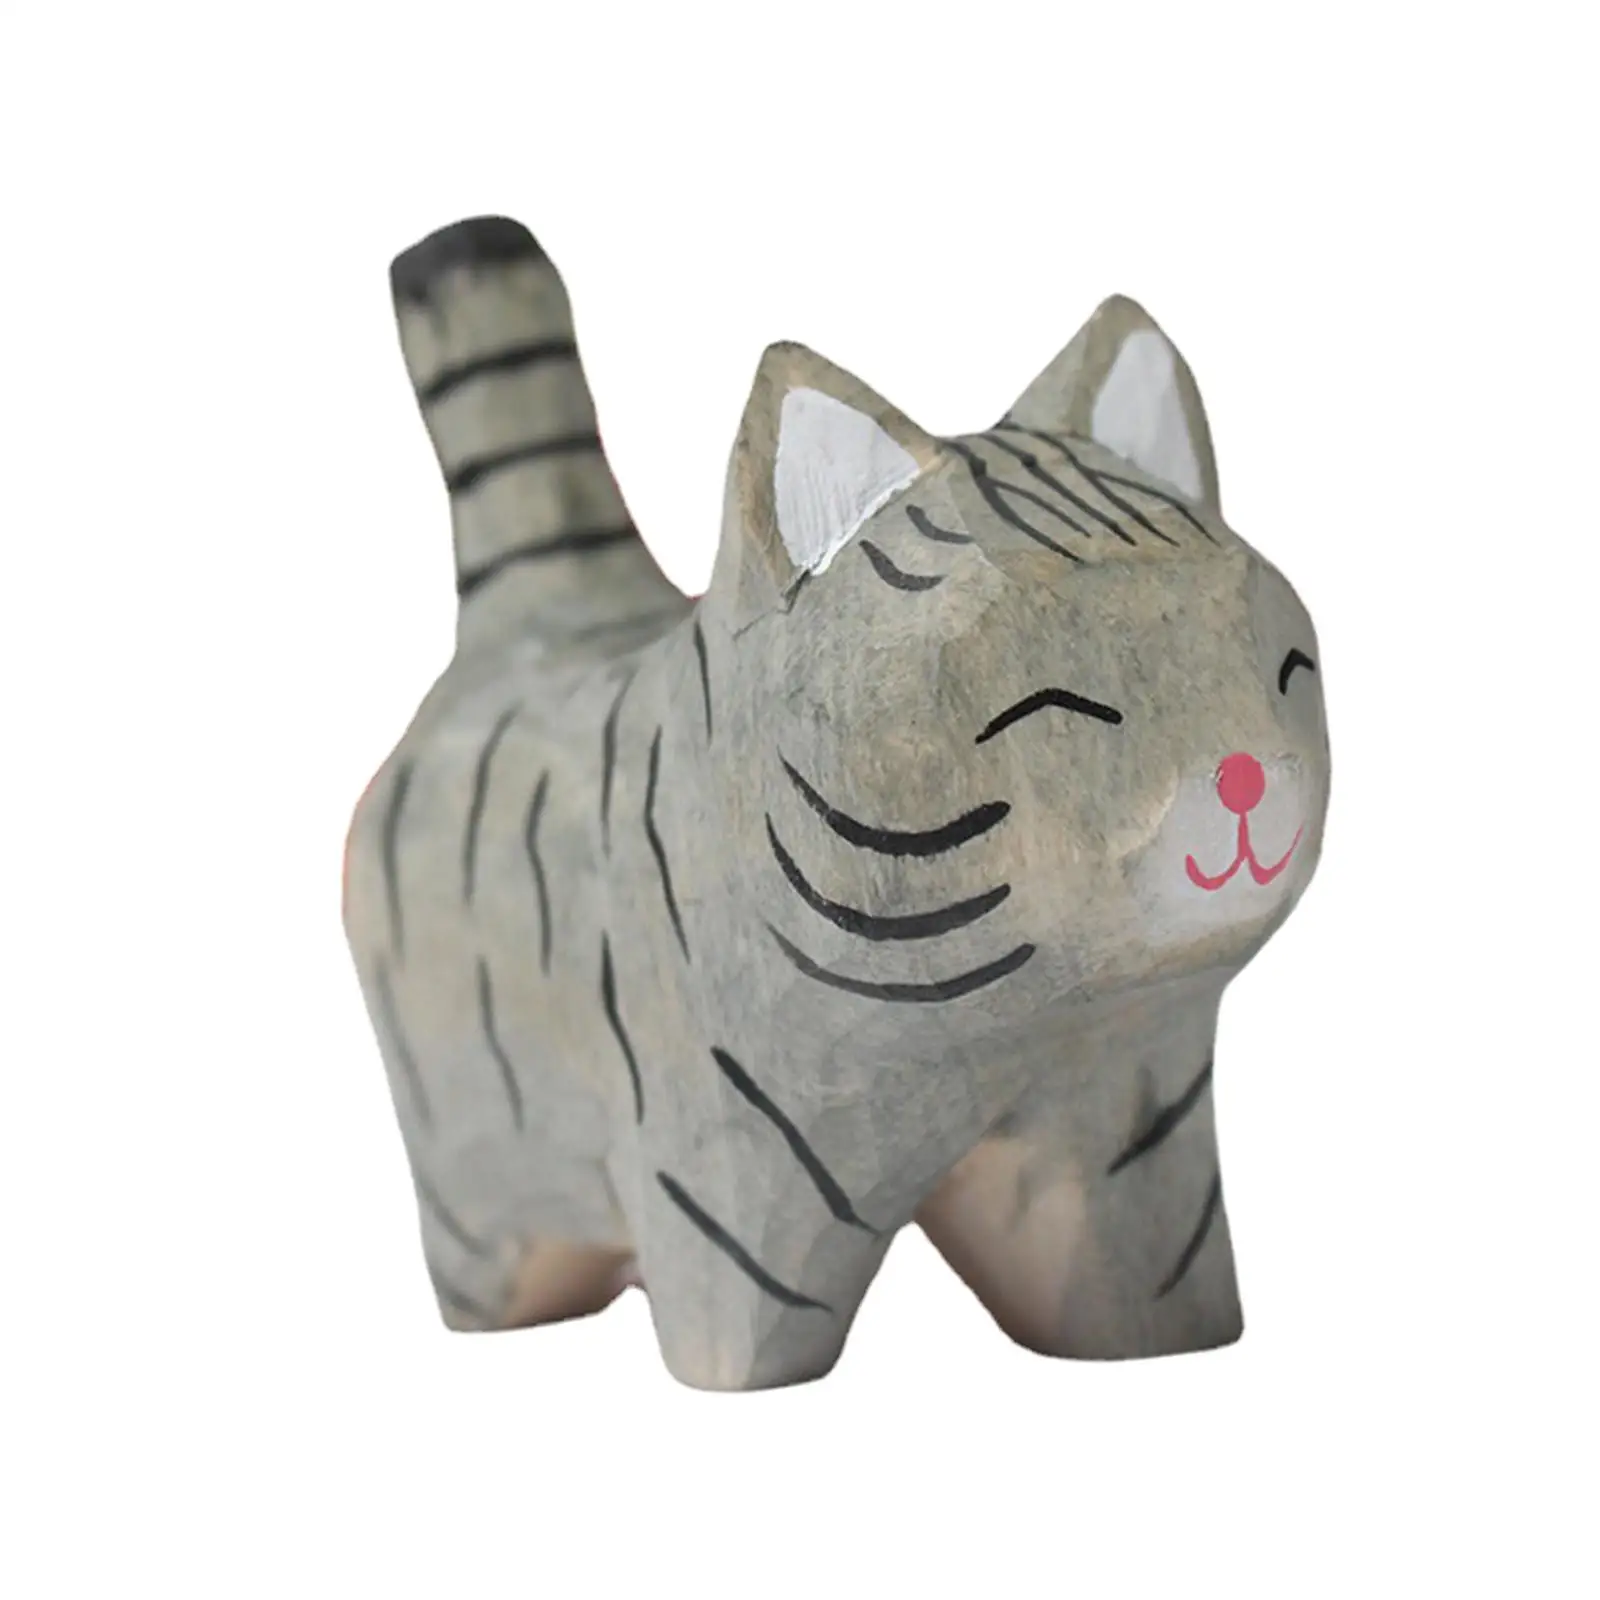 Lovely Wood Carved Cat Decor Tiny DIY Gift Handmade Figurine Animals Model Cute